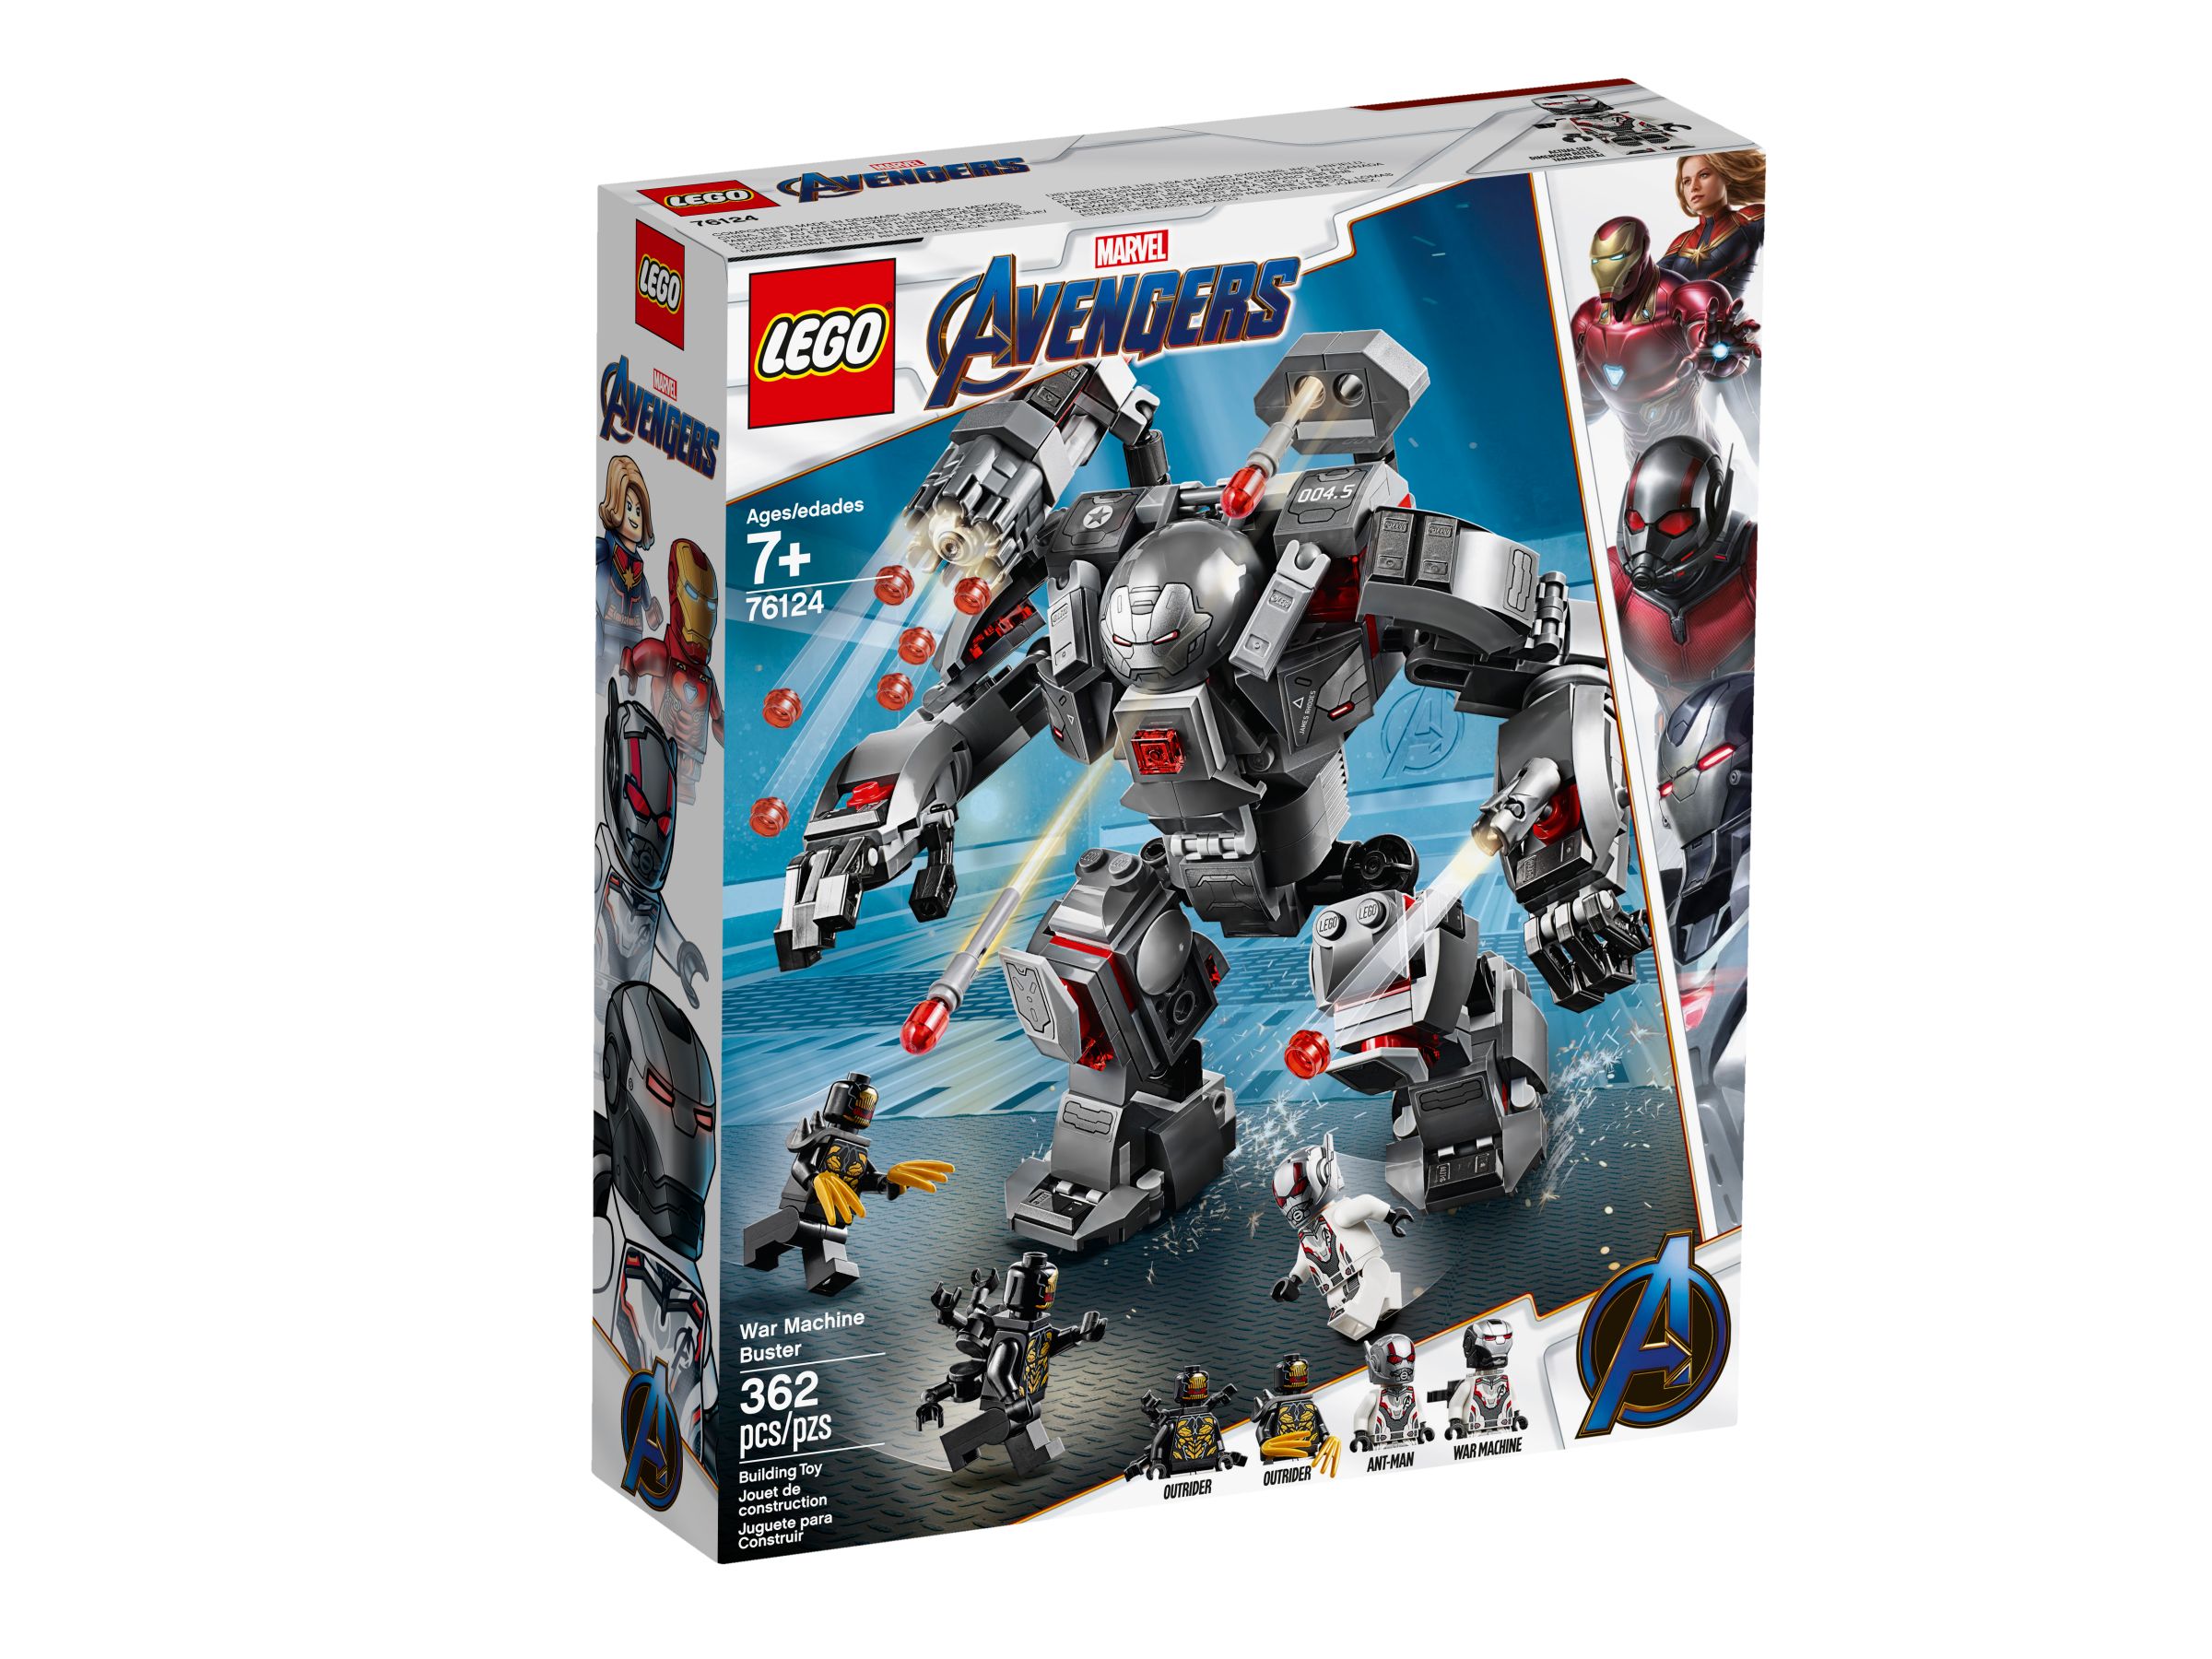 LEGO Super Heroes 76124 War Machine Buster LEGO_76124_alt1.jpg